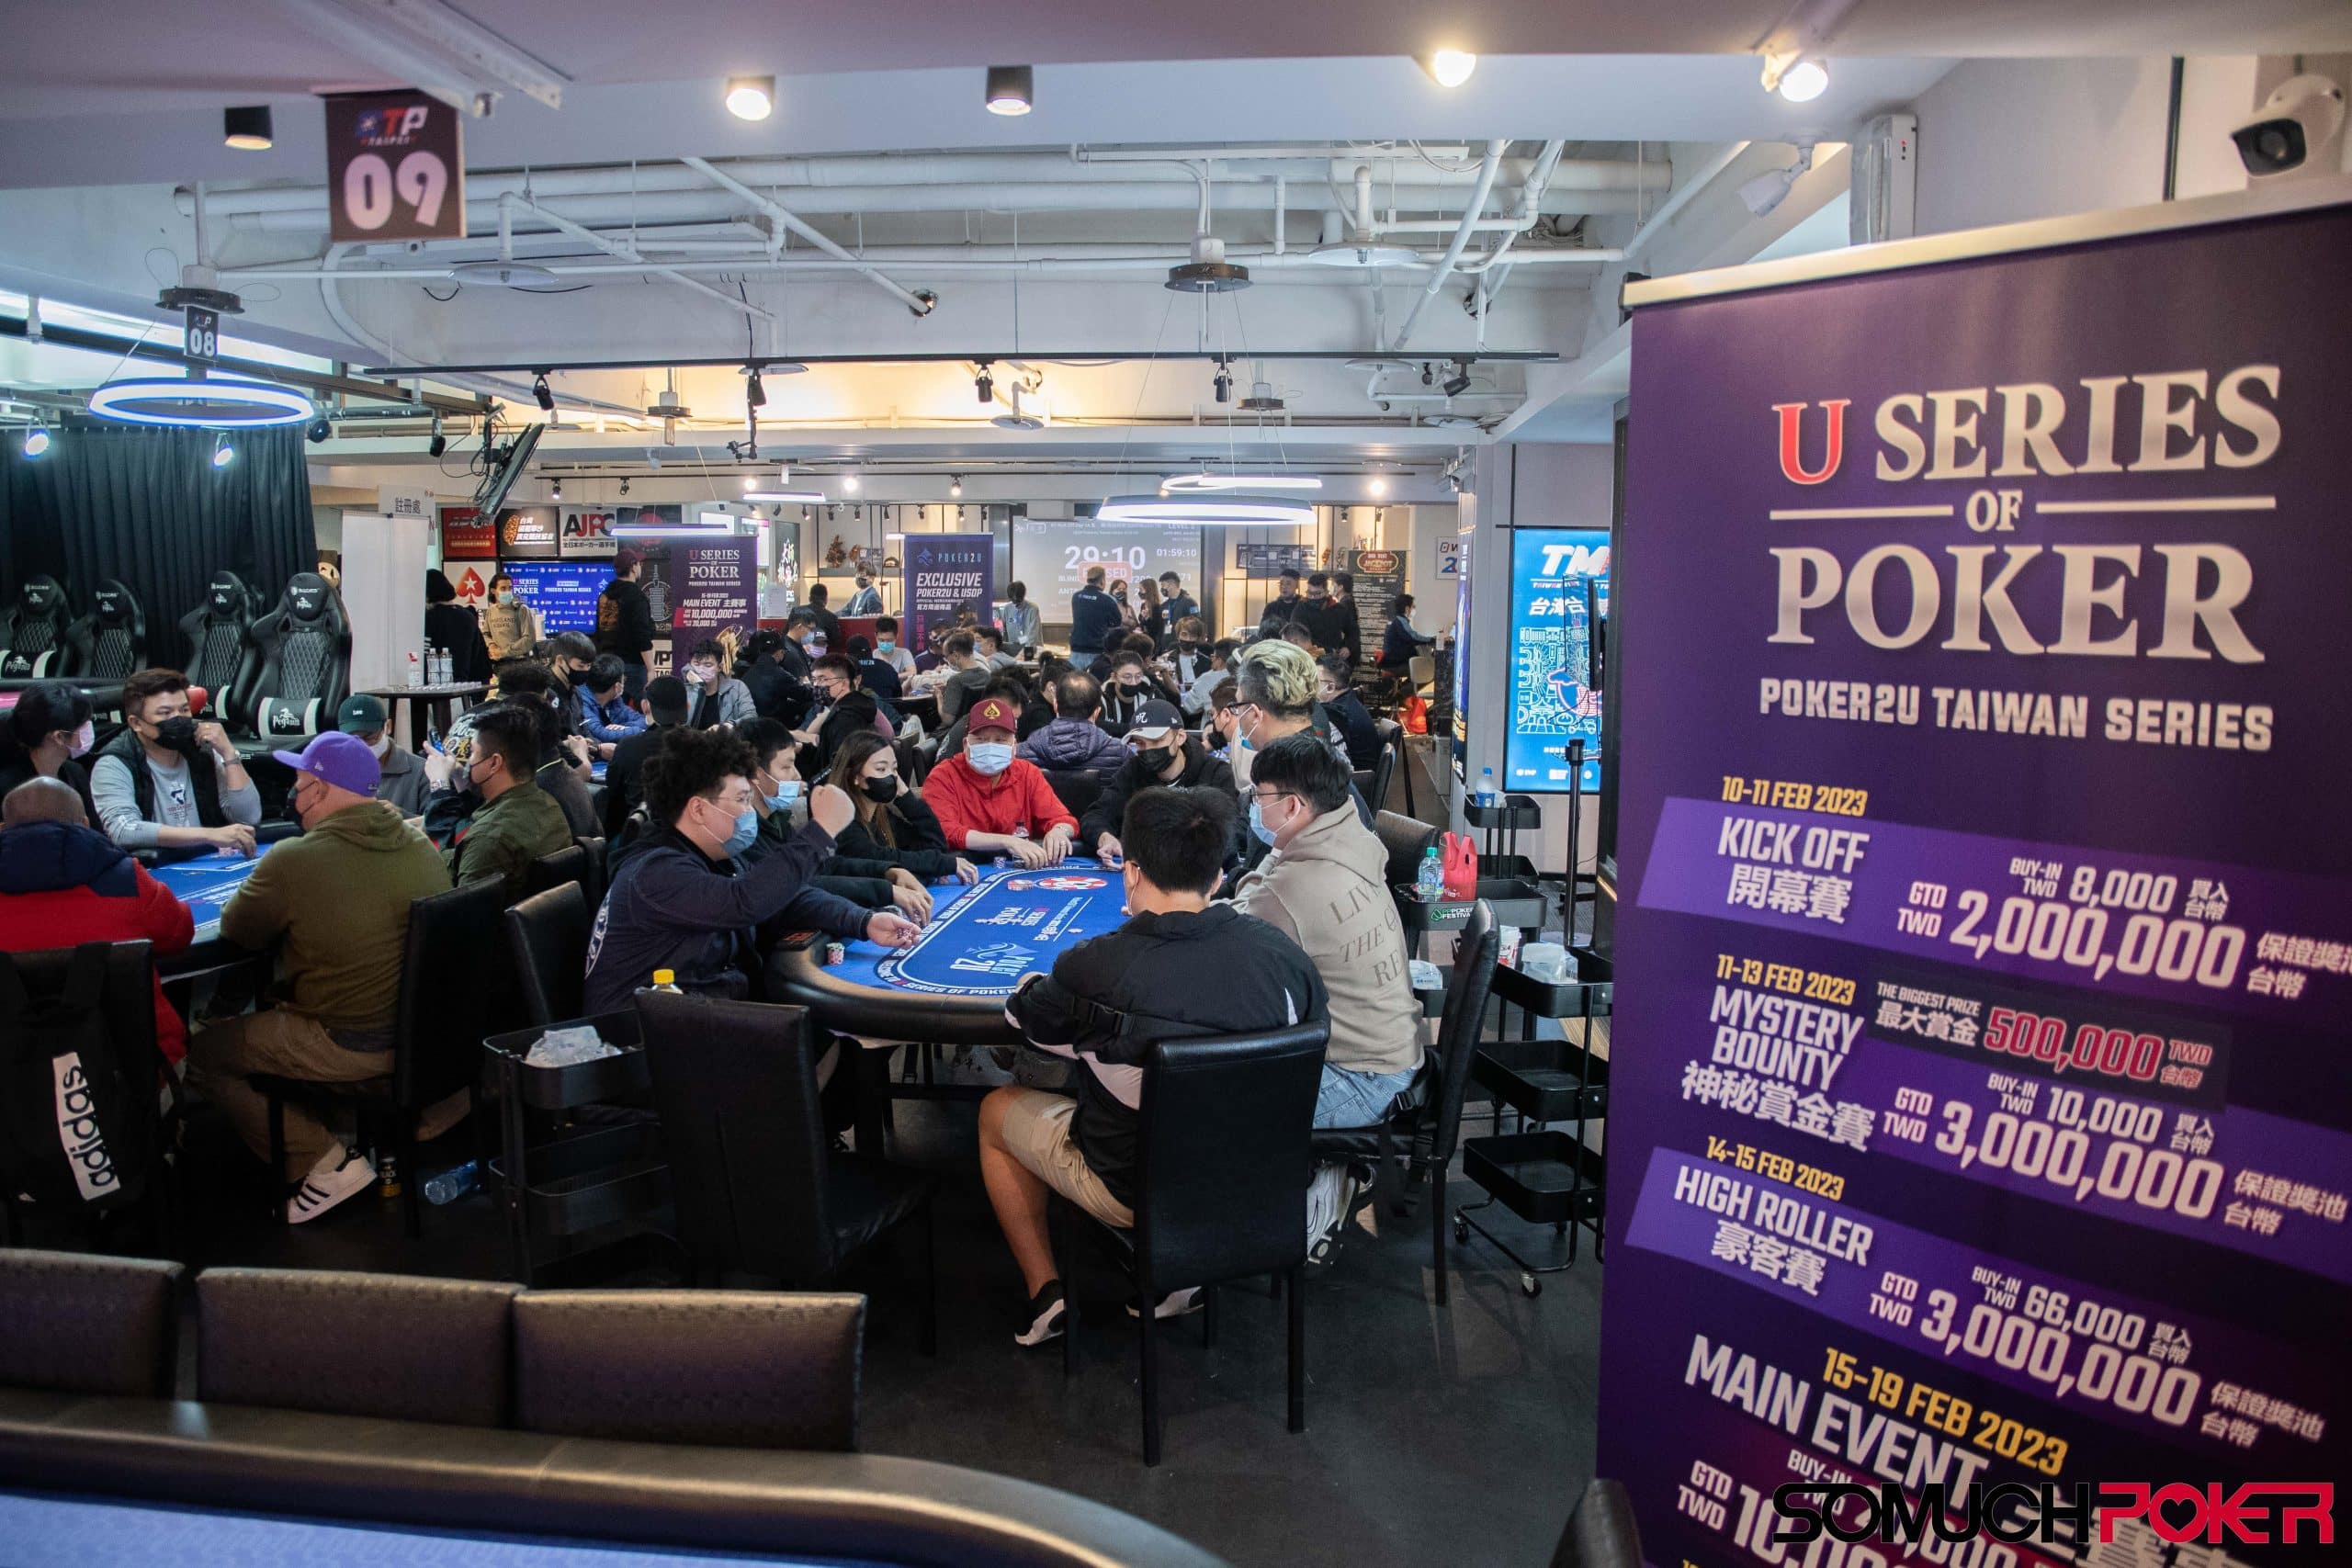 USOP: Poker2U Taiwan Series underway at the CTP Club in Taipei!